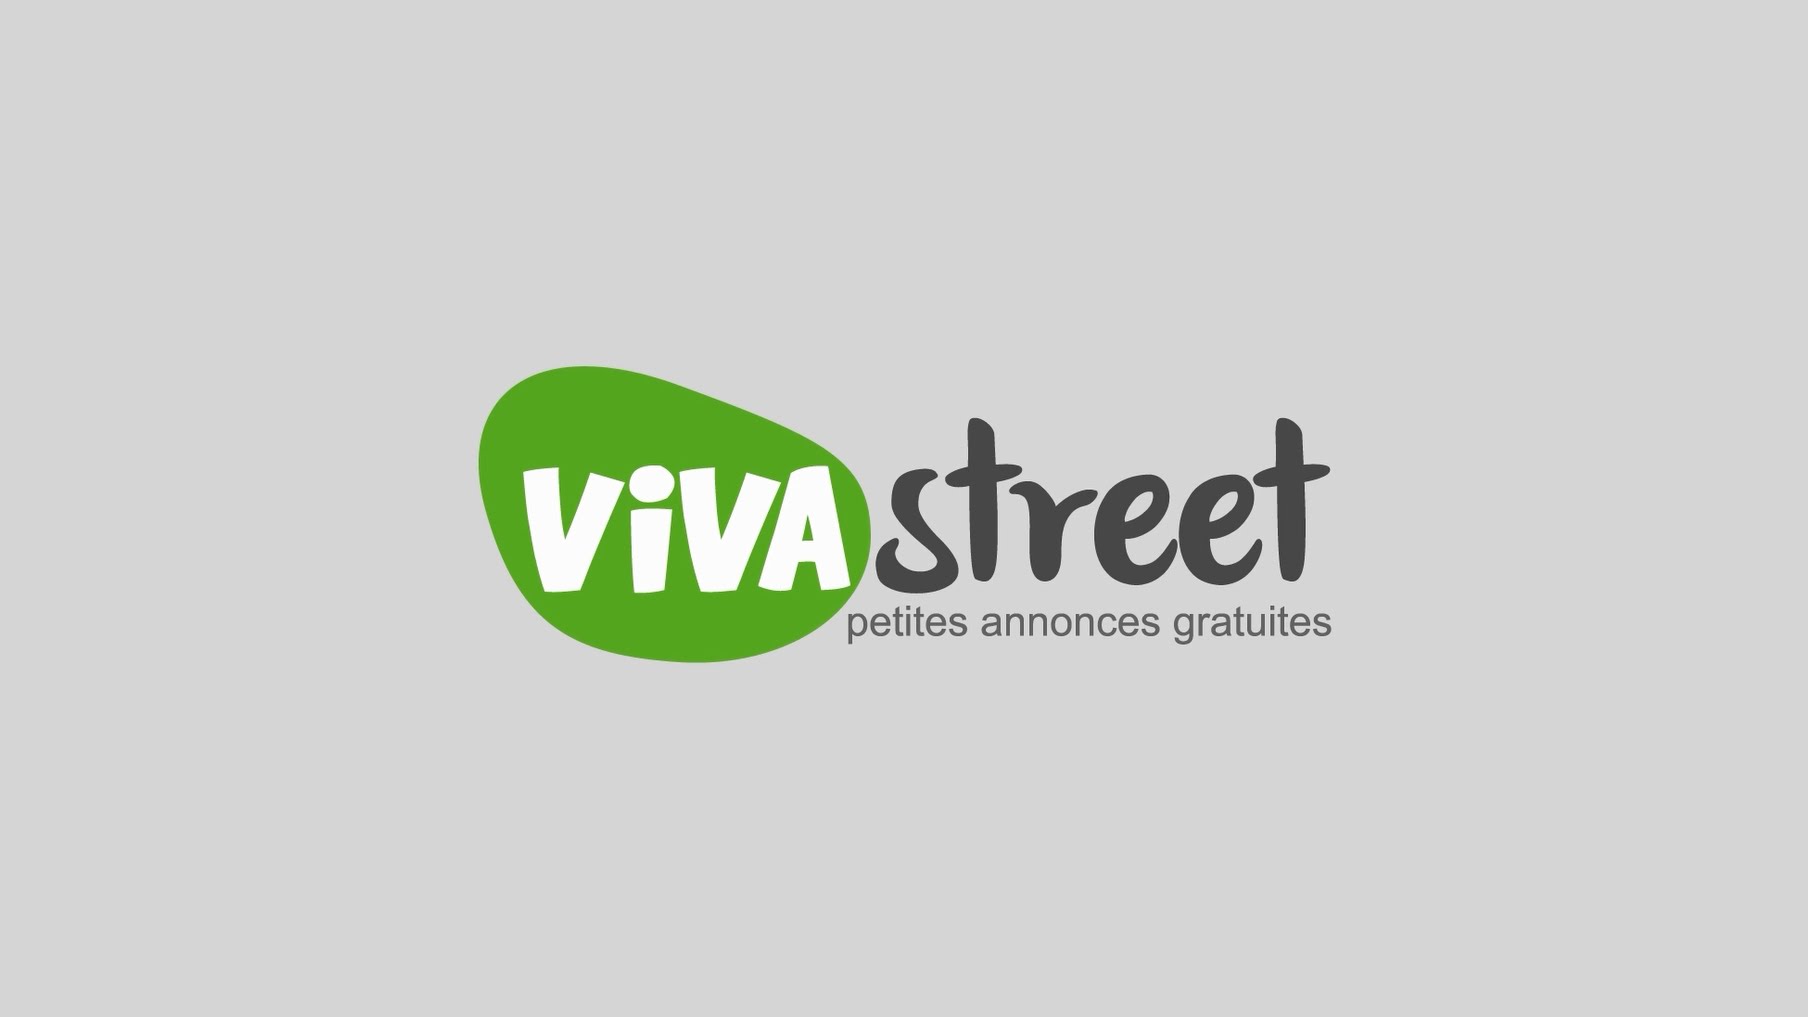 Viva streets